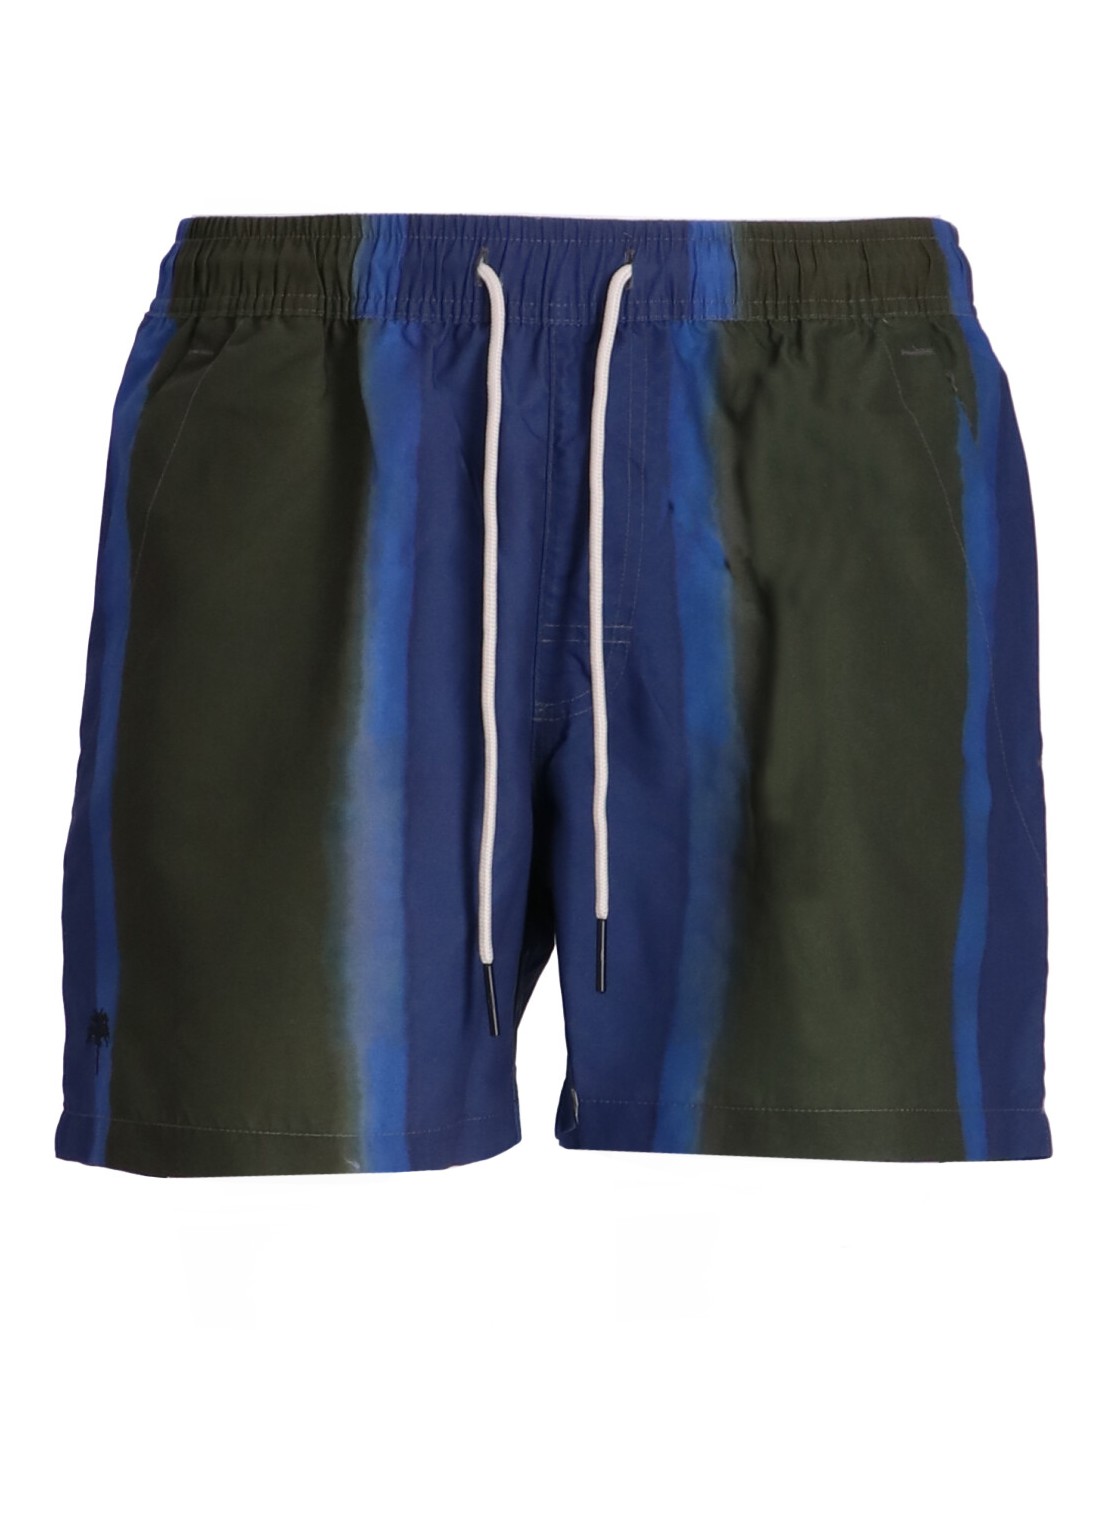 Bermuda oas cargo man murky mist swim shorts 5001309 murky mist talla Azul
 